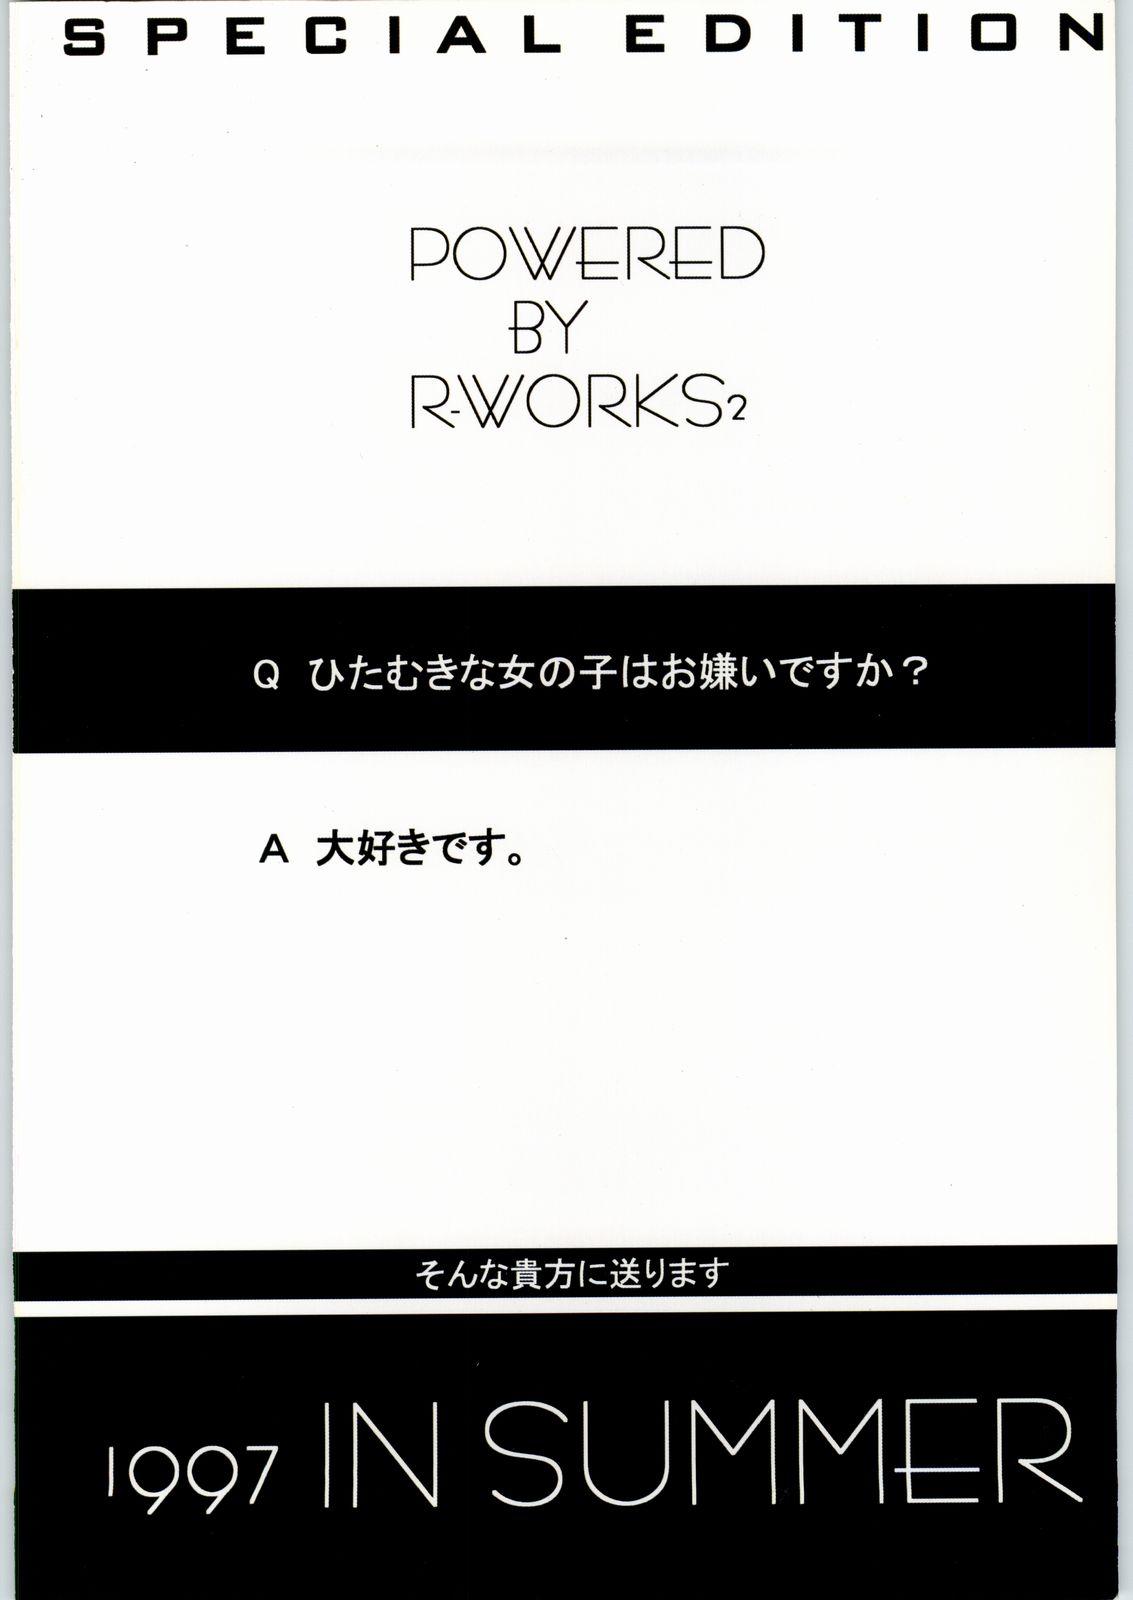 POWERED BY R-WORKS II Bishoujo Renai Game Tokushuu SPECIAL EDITION 61